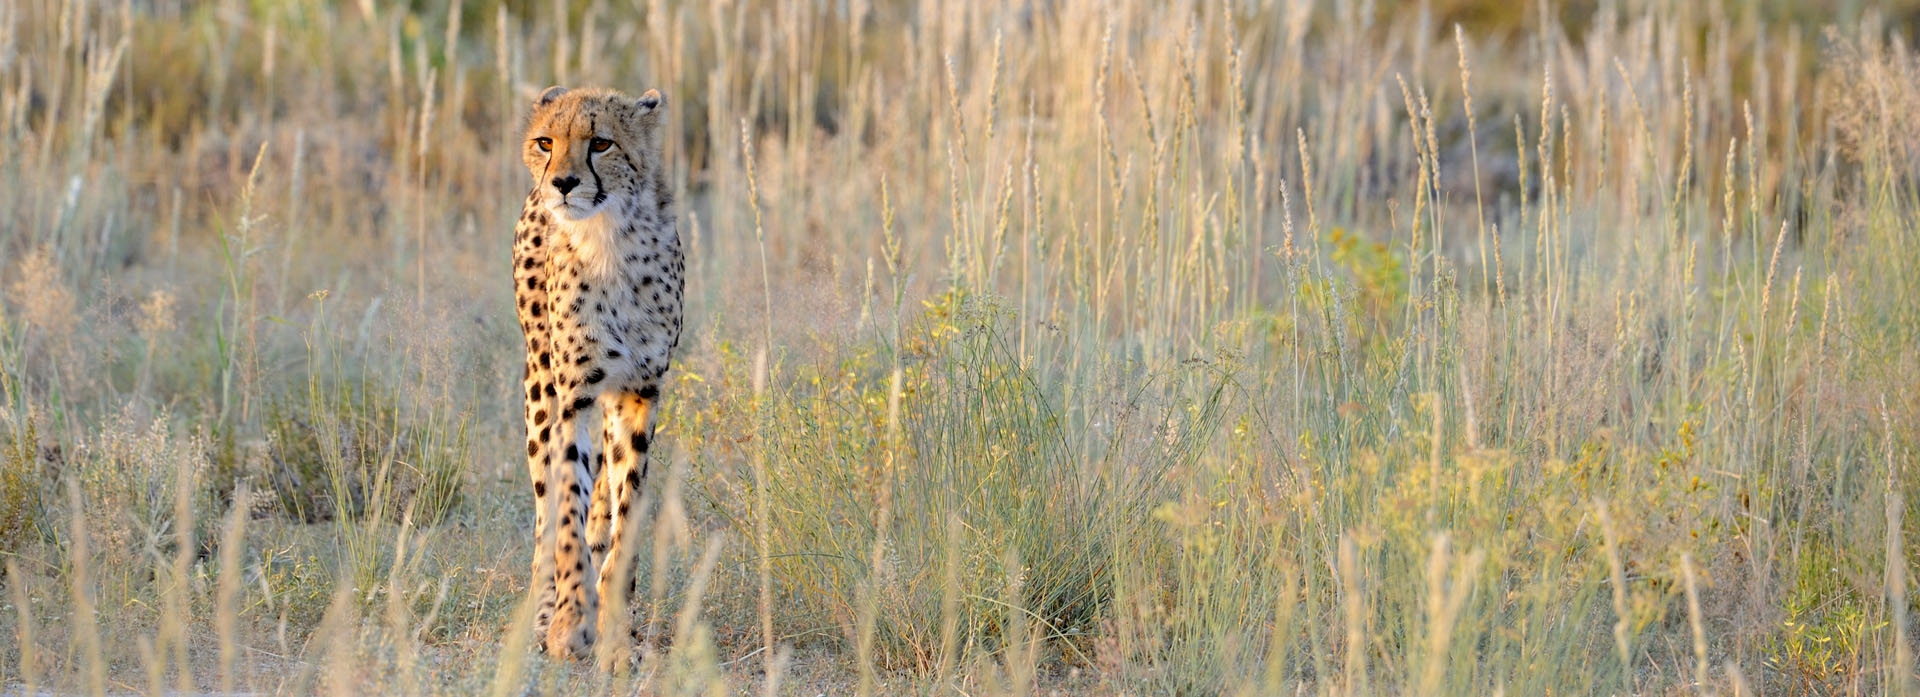 Cheetah hunting in Kgalagadi Transfrontier Park